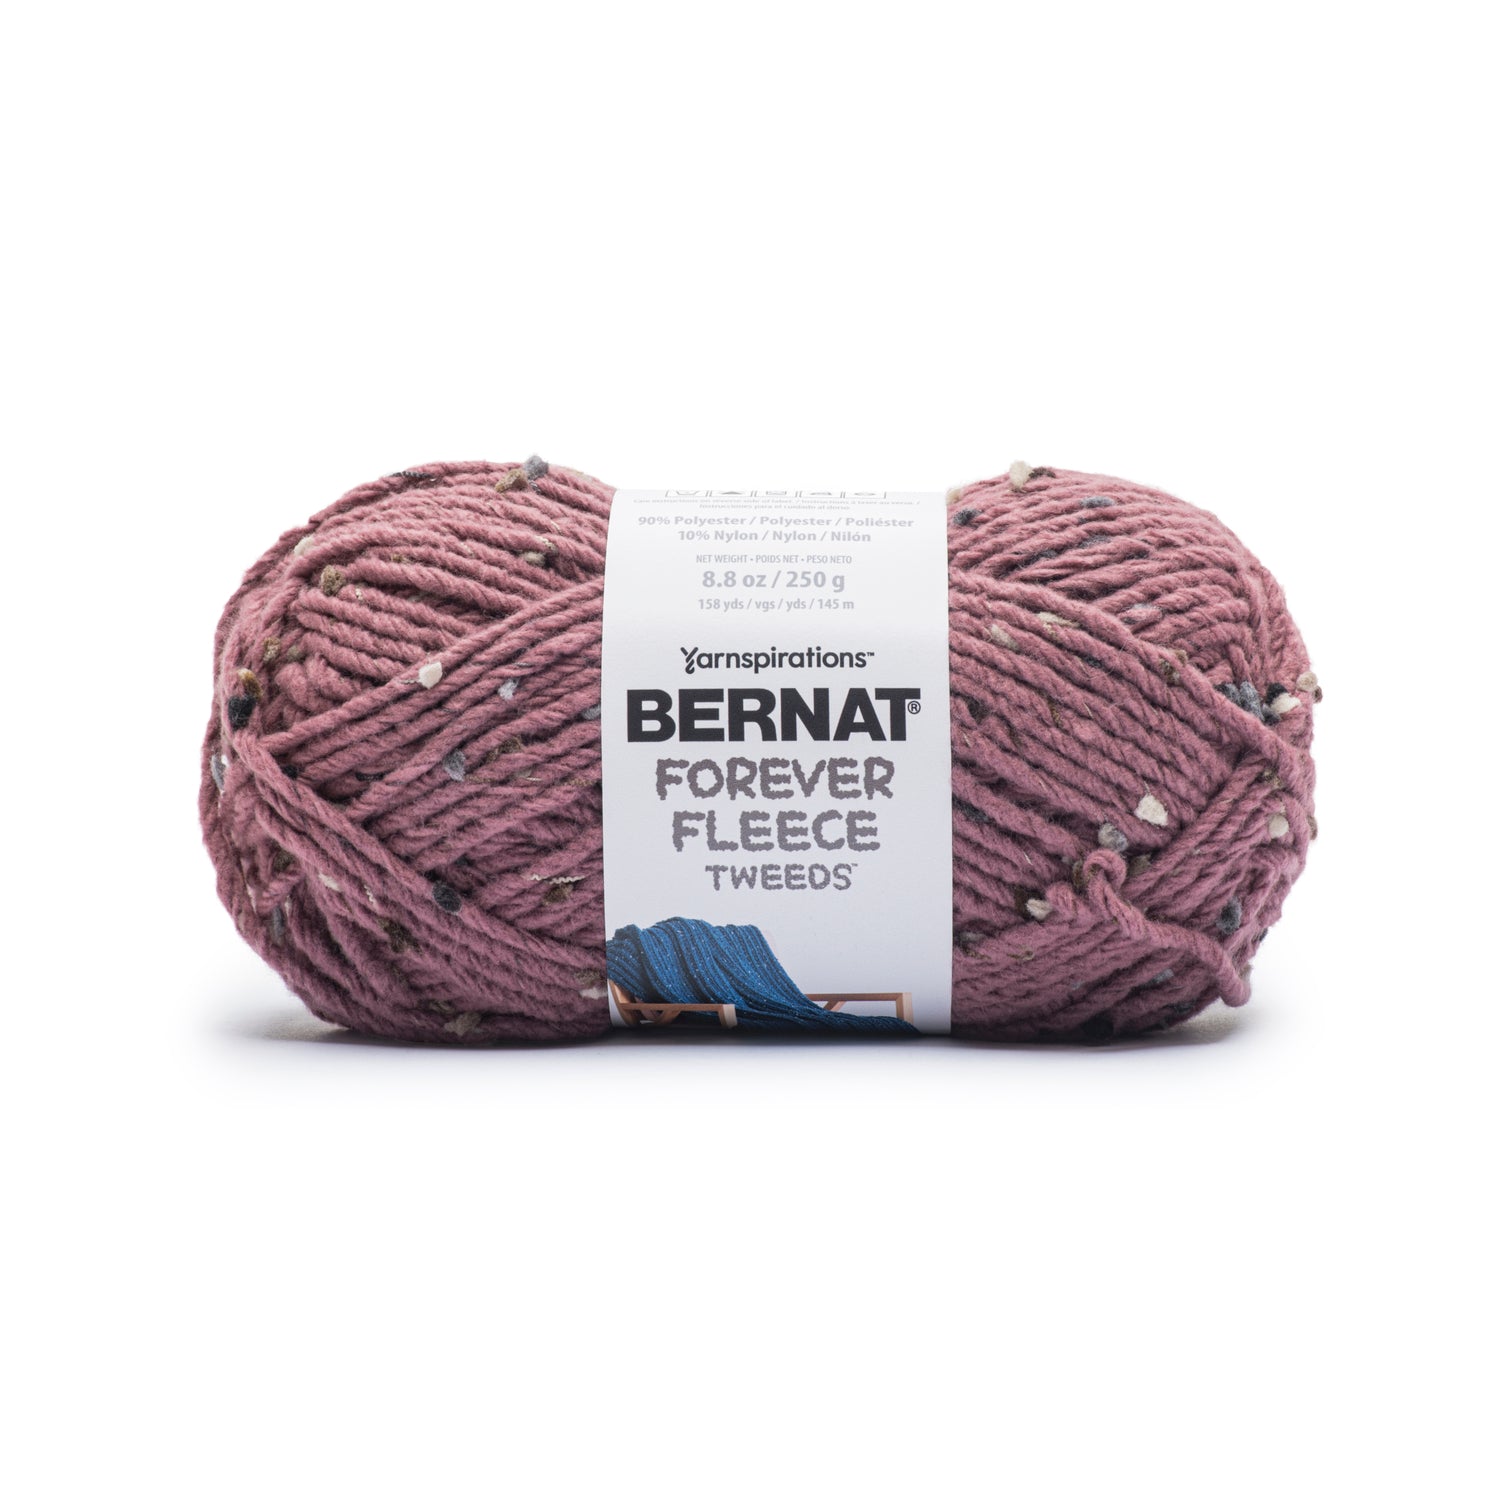 Bernat Forever Fleece Tweeds Yarn (250g/8.8oz) Cabernet Tweed